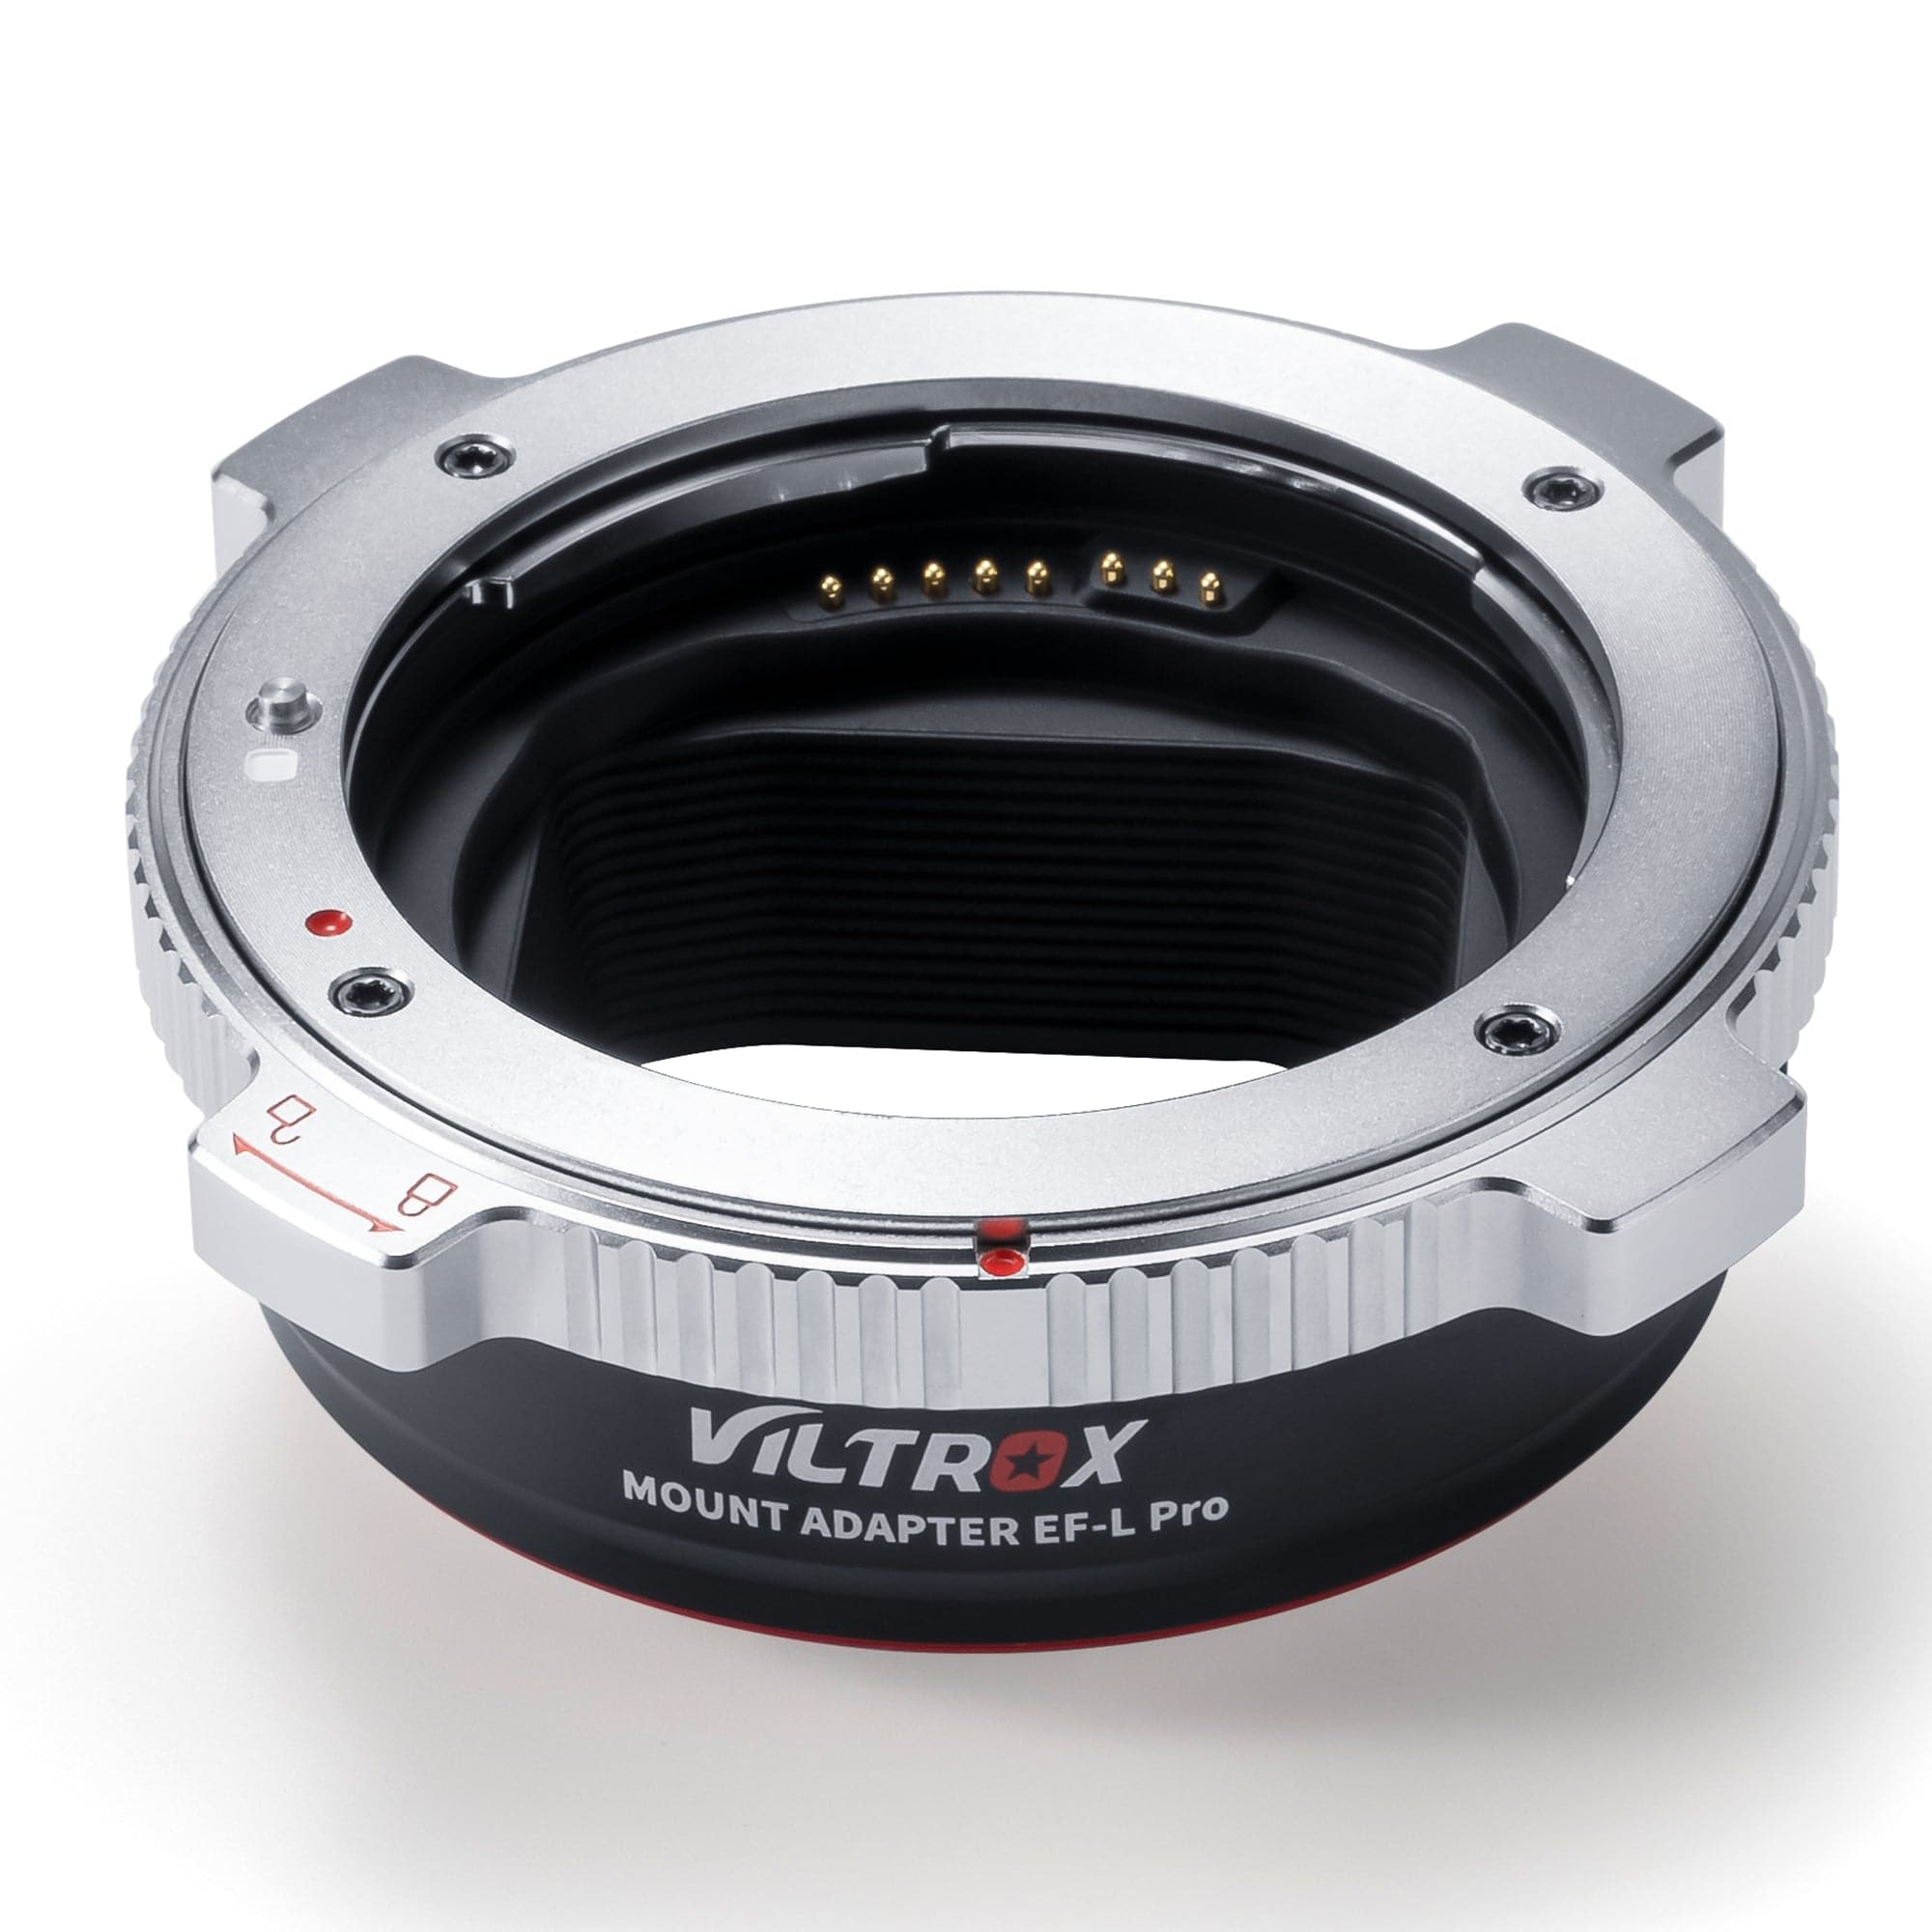 Viltrox Upgraded Pro Version EF-L AF Mount Adapter For EF/EF-S Lens Pair with Leica/Panasonic/Sigma L-mount Cameras with Positive-lock EF Lens Mount